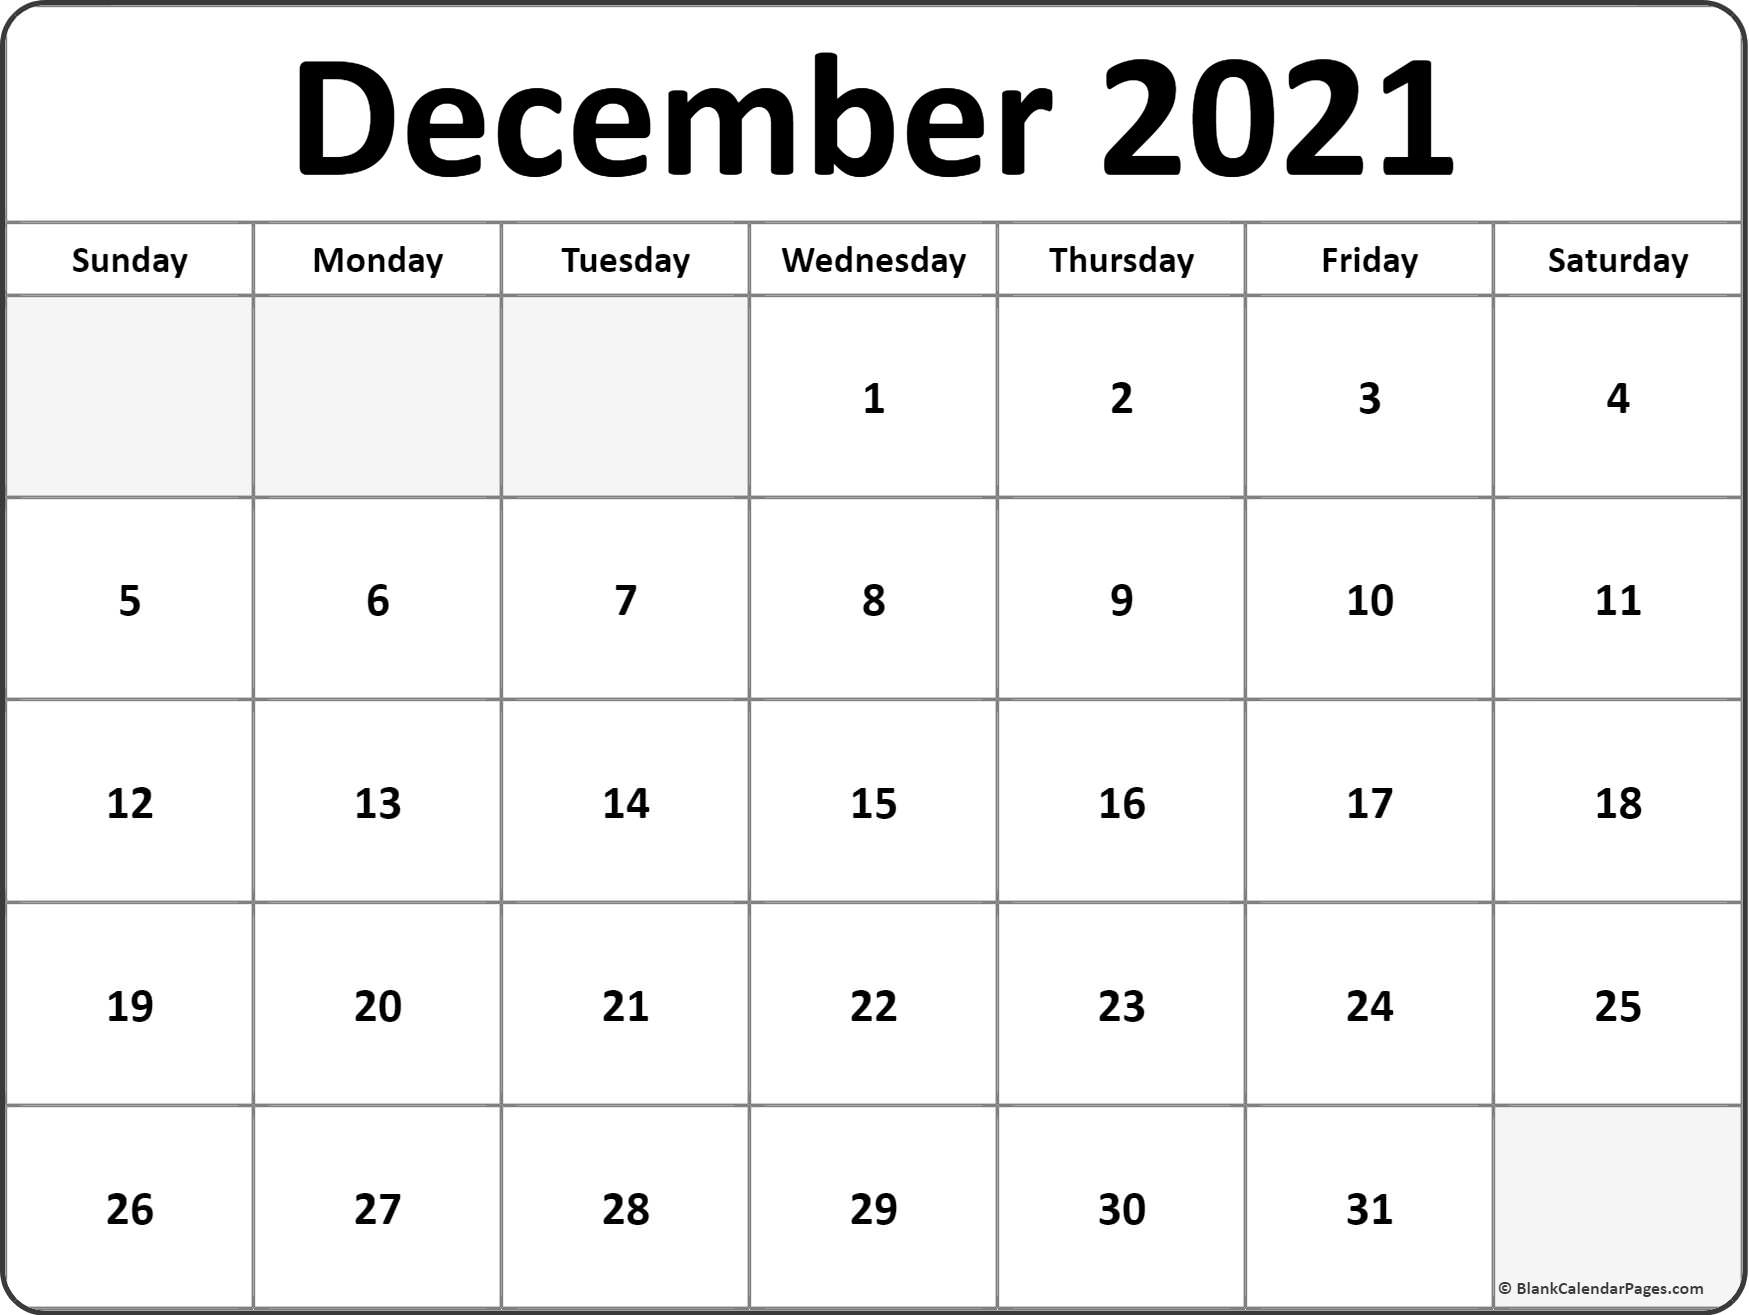 December 2021 Blank Calendar Templates. December 2021 Calendar Holidays